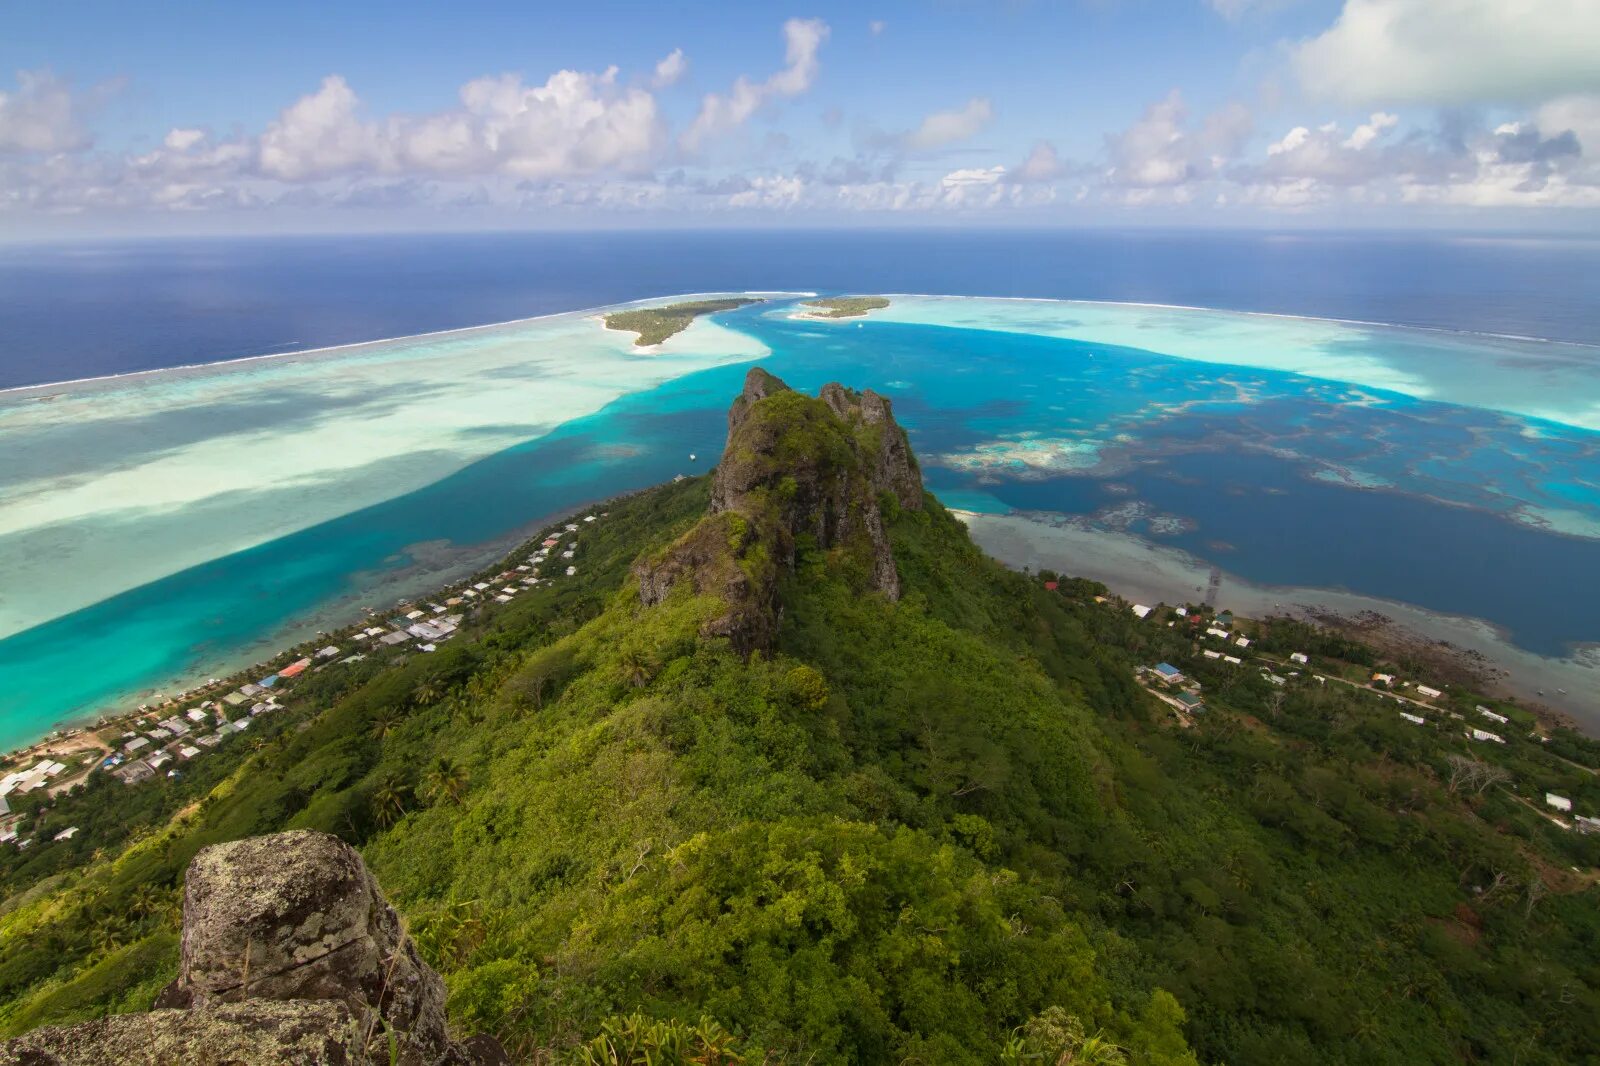 Крупнейшие архипелаги тихого океана. Таити французская Полинезия. Таити остров архипелаг. Острова Туамоту французская Полинезия. Французская Полинезия (Polynesie francaise) и остров Таити (Tahiti).